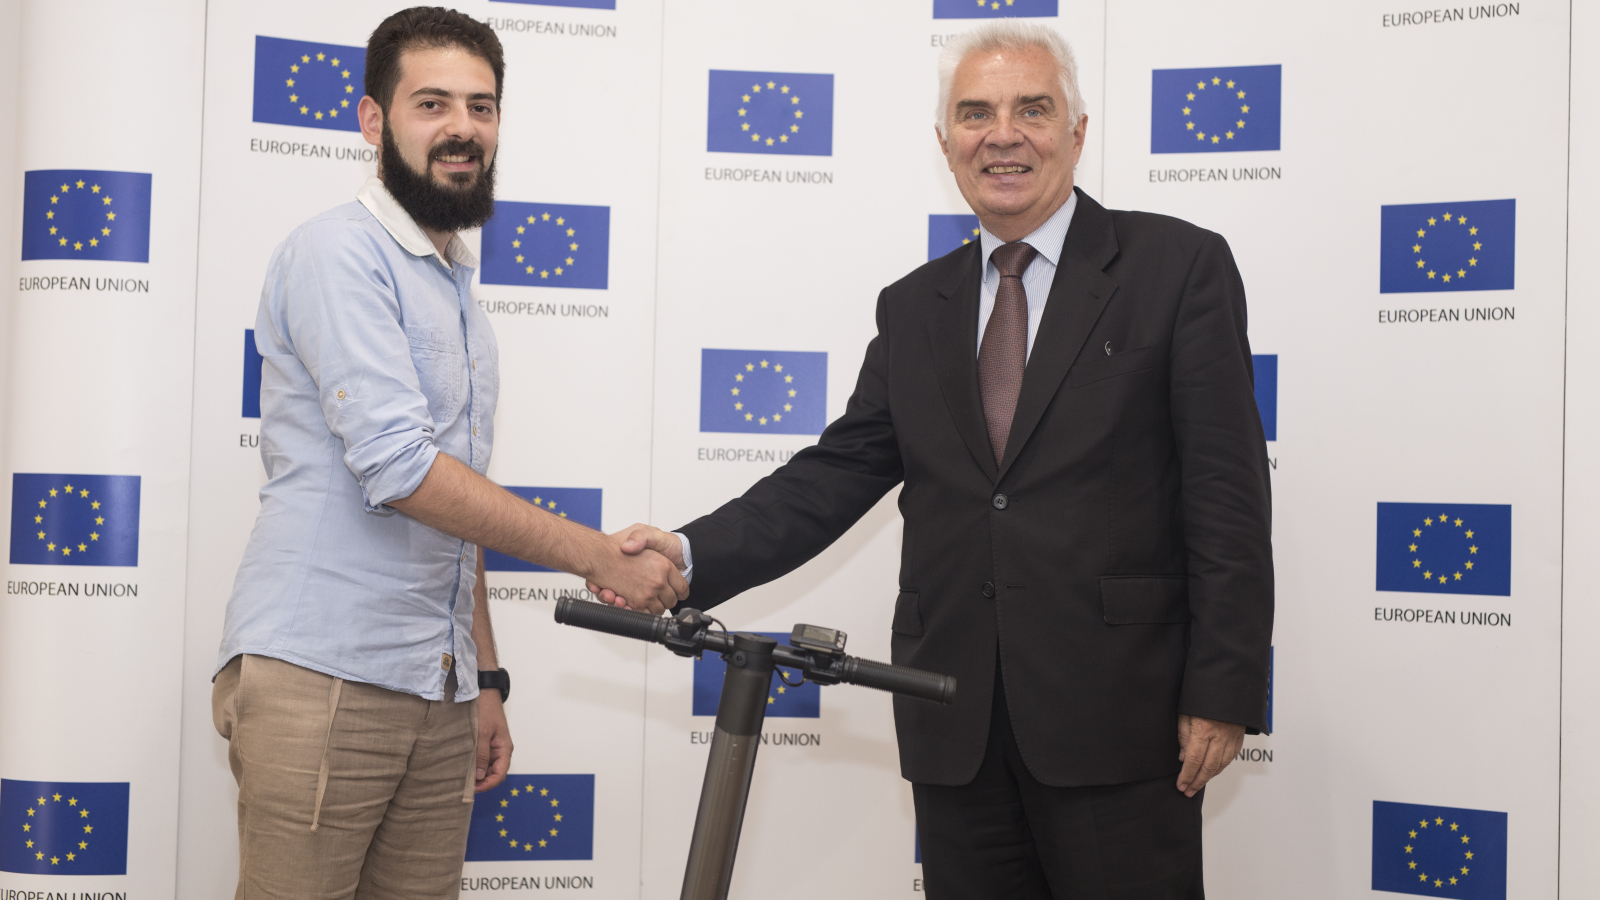 Winner of #EU4Energy photo competition received his prize from EU Ambassador to Armenia 